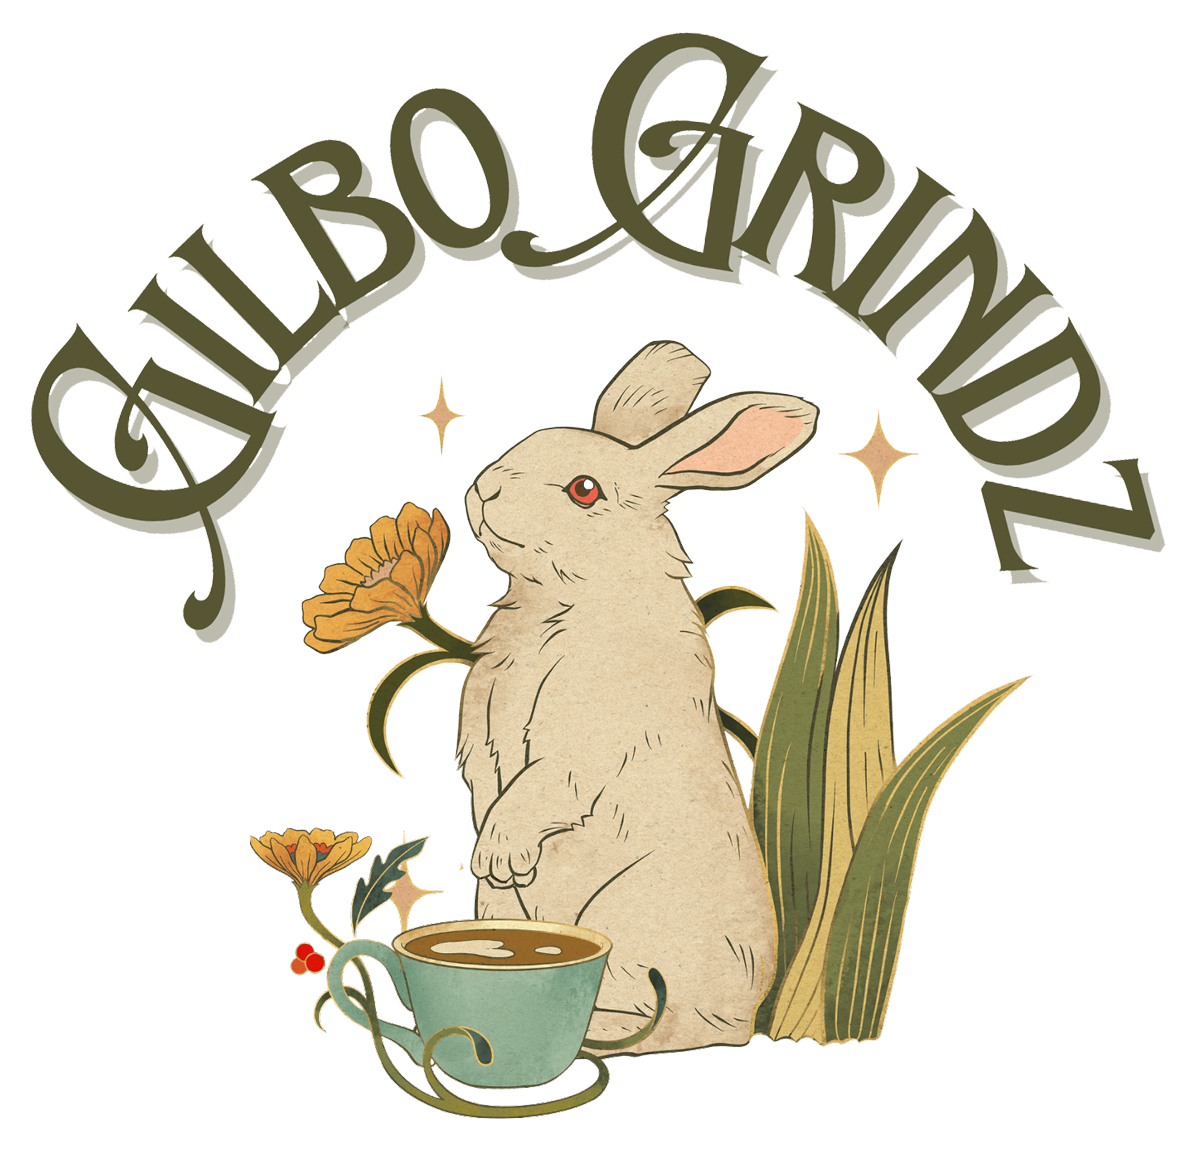 Gilboa Grindz Logo